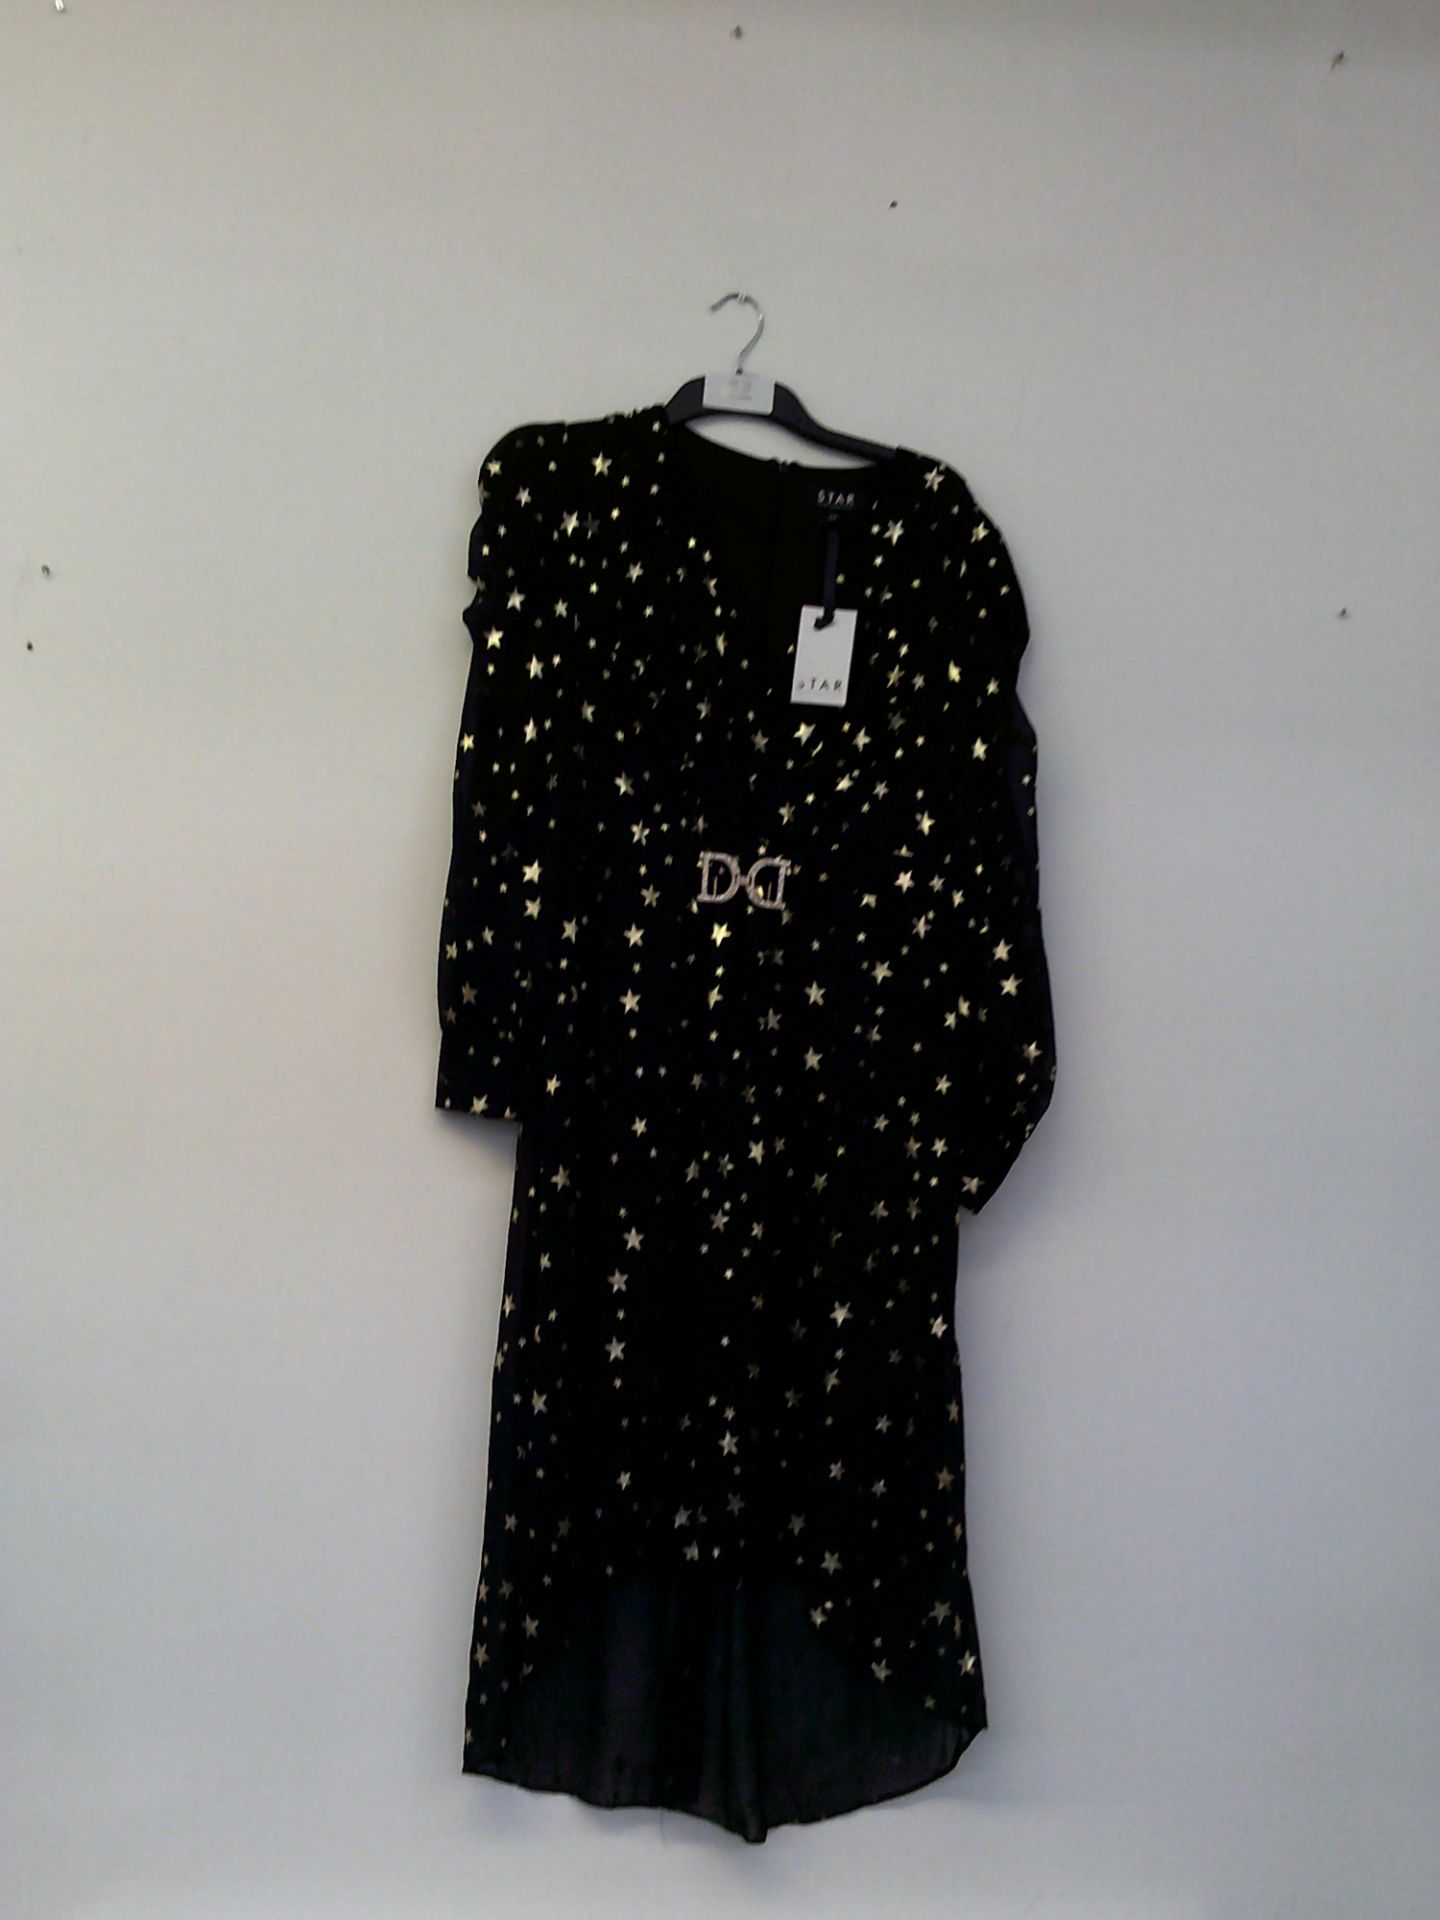 Star Julian Macdonald Star Dress Size 14